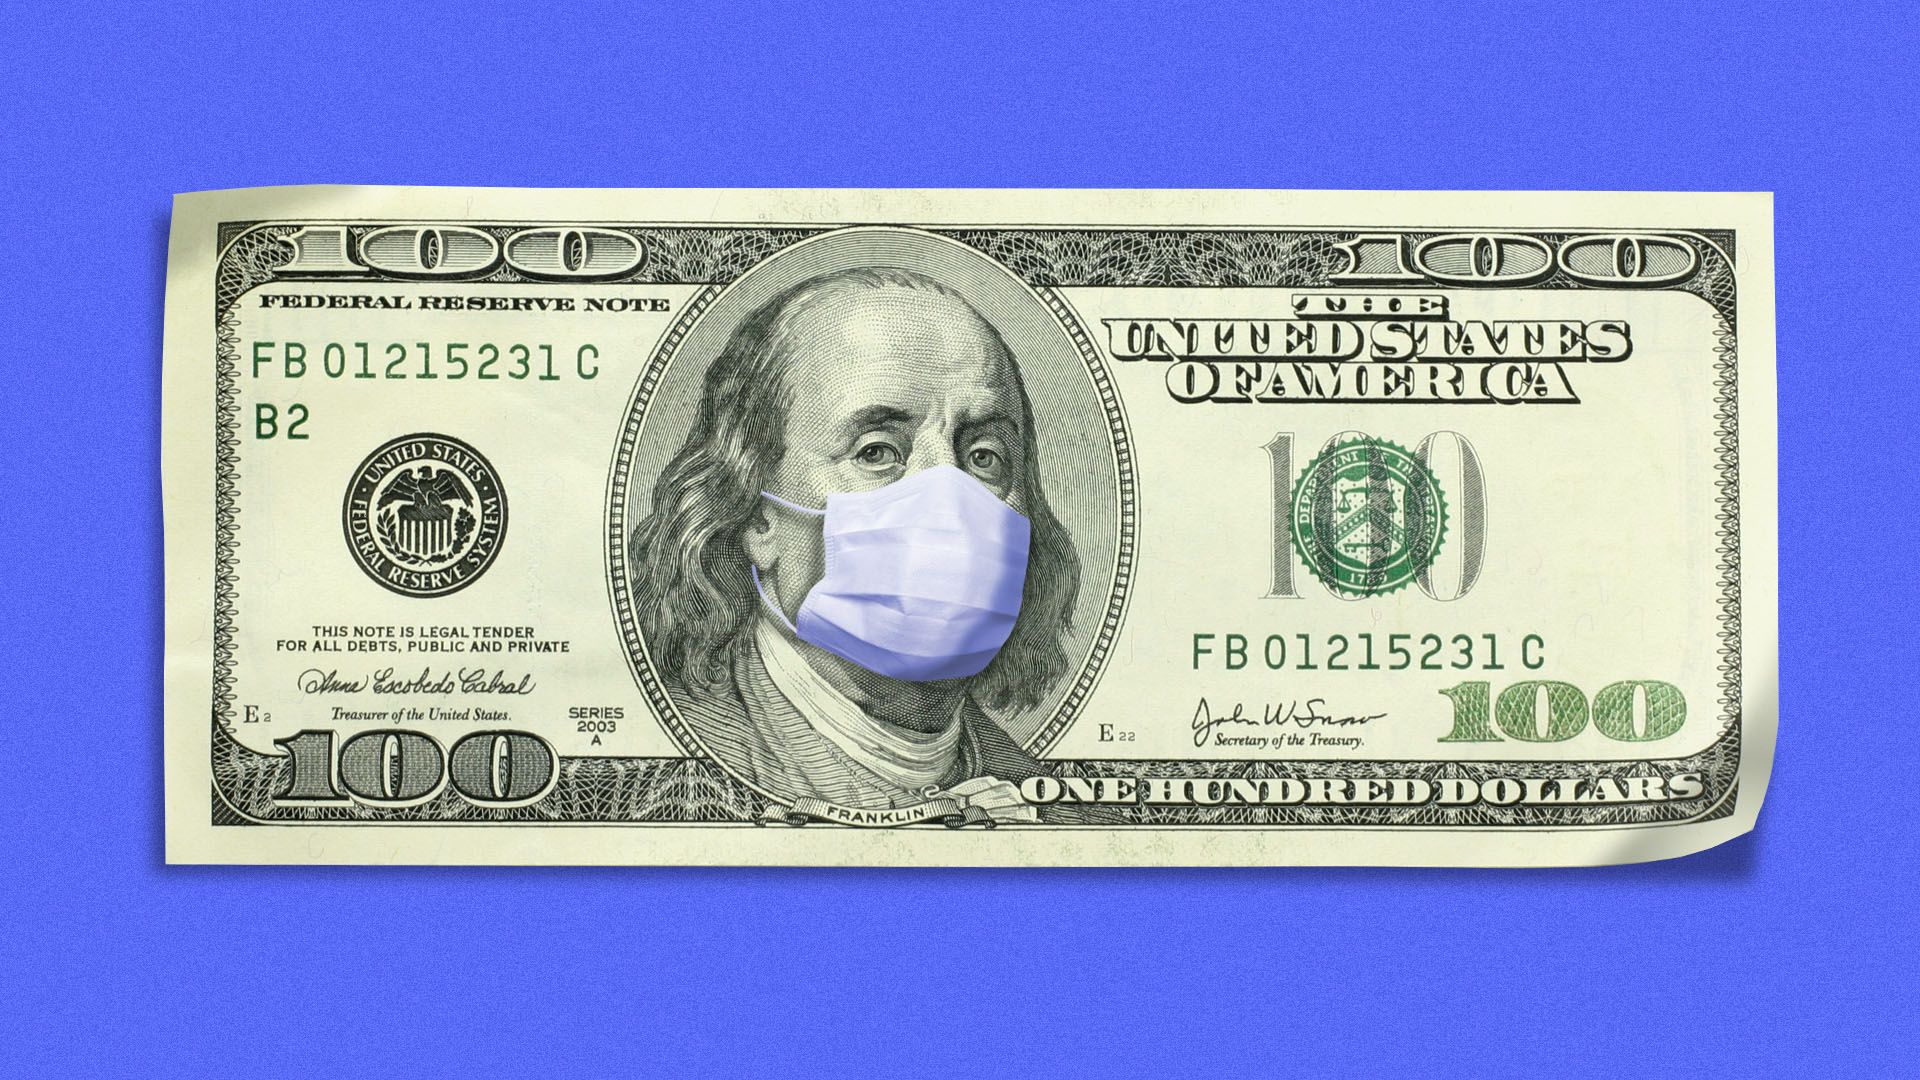 Illustration of Benjamin Franklin on a 100 dollar bill wearing a medical mask